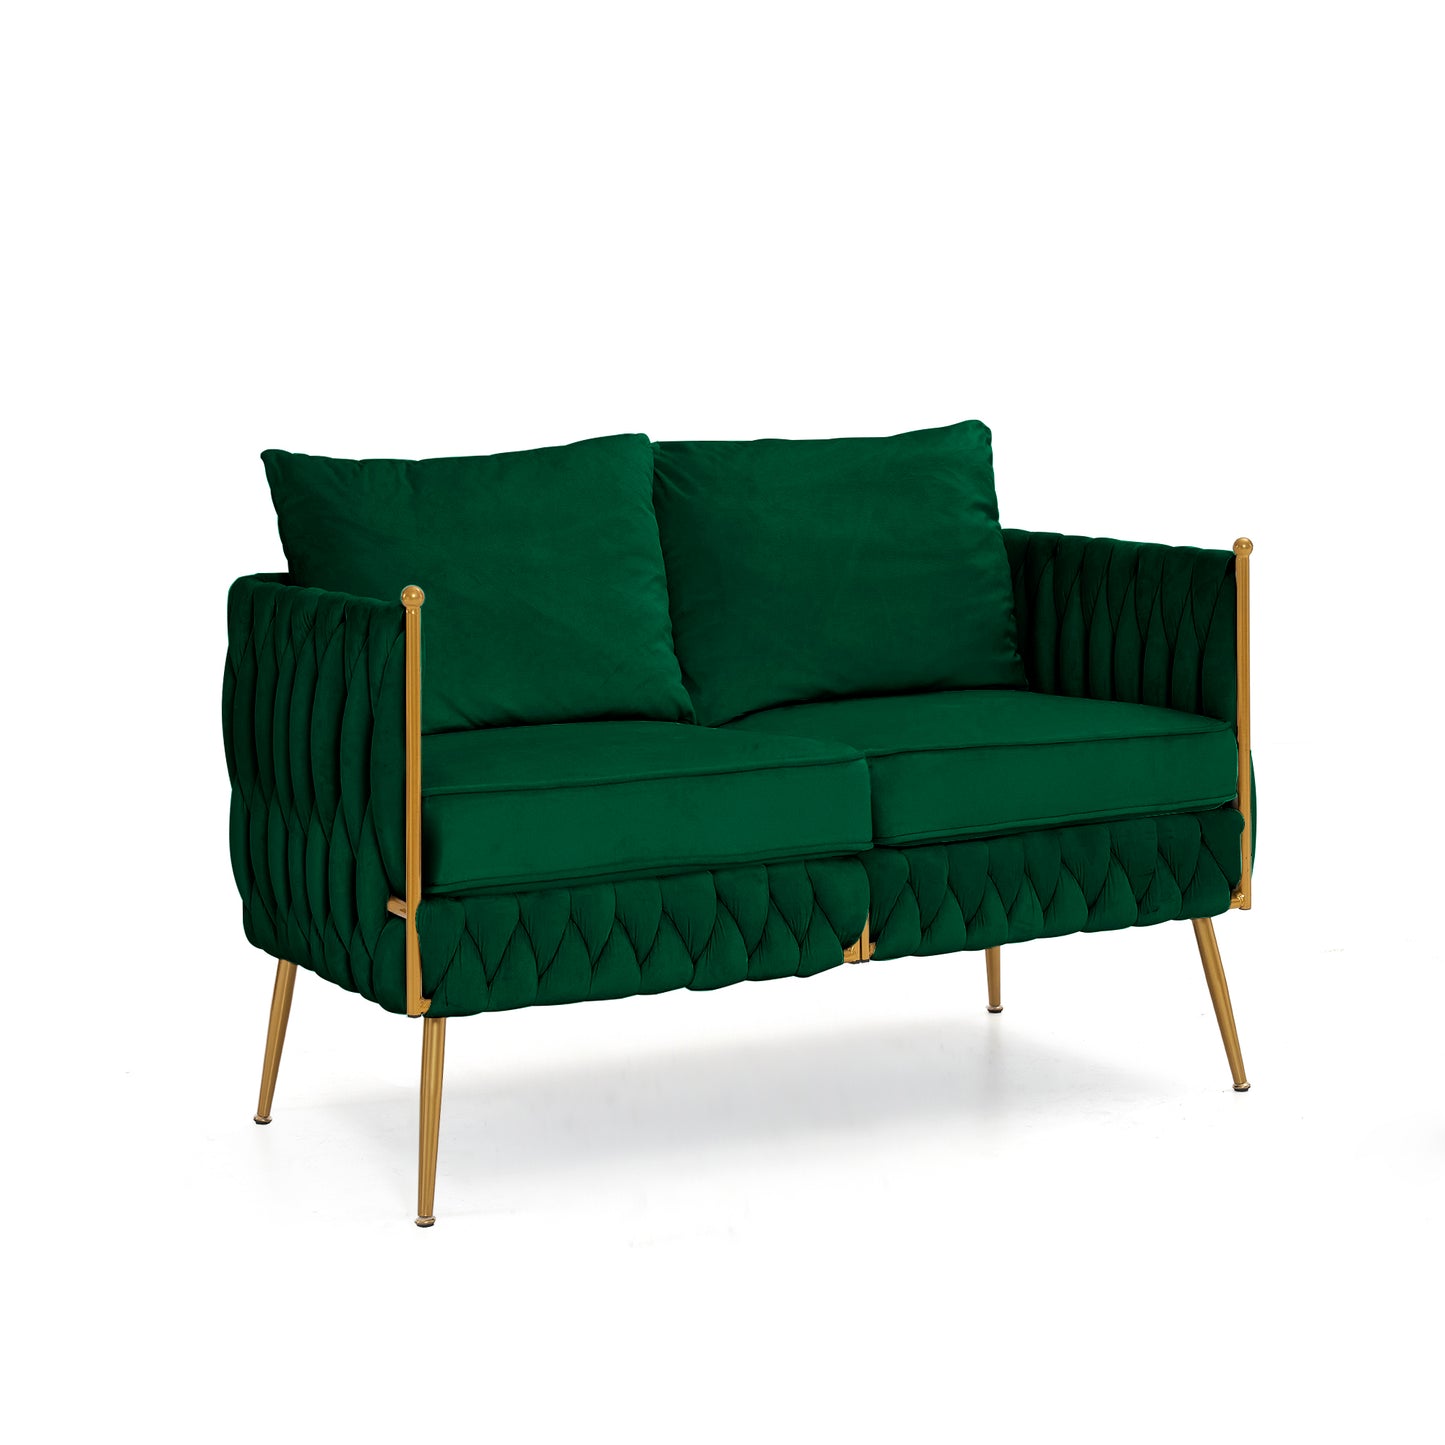 2 Pieces of Loveseat Set Modern Living Room Furniture Set Sofa Couch with Dutch Velvet, Golden Metal Legs And Handmade Woven Back, Green Velvet